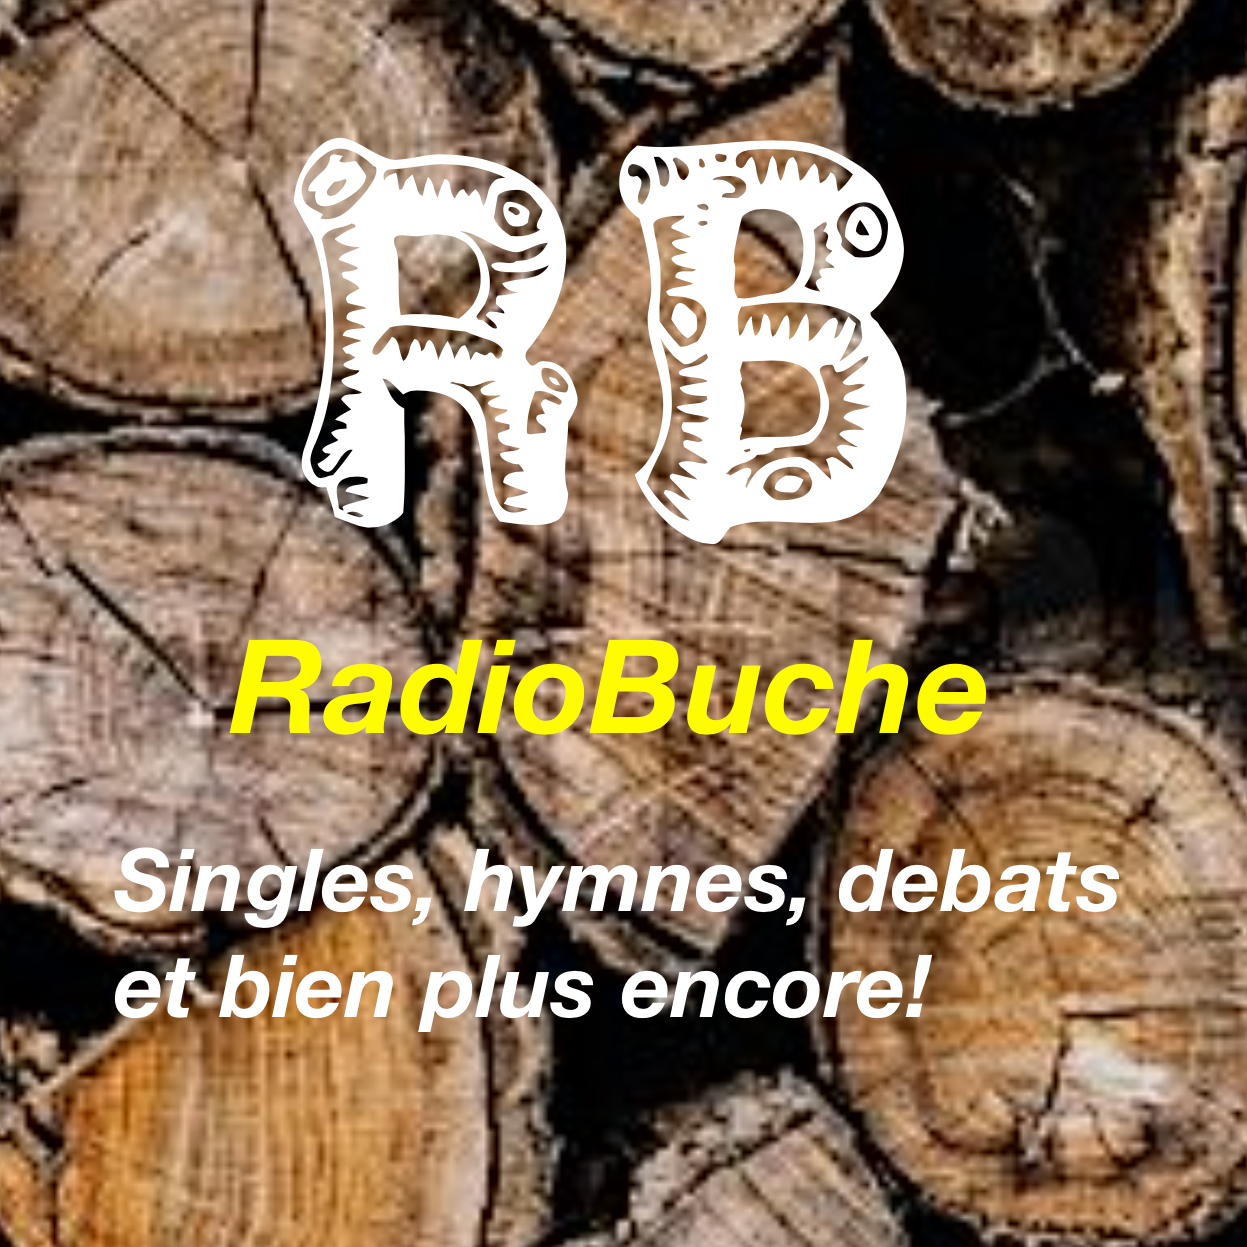 RadioBuche